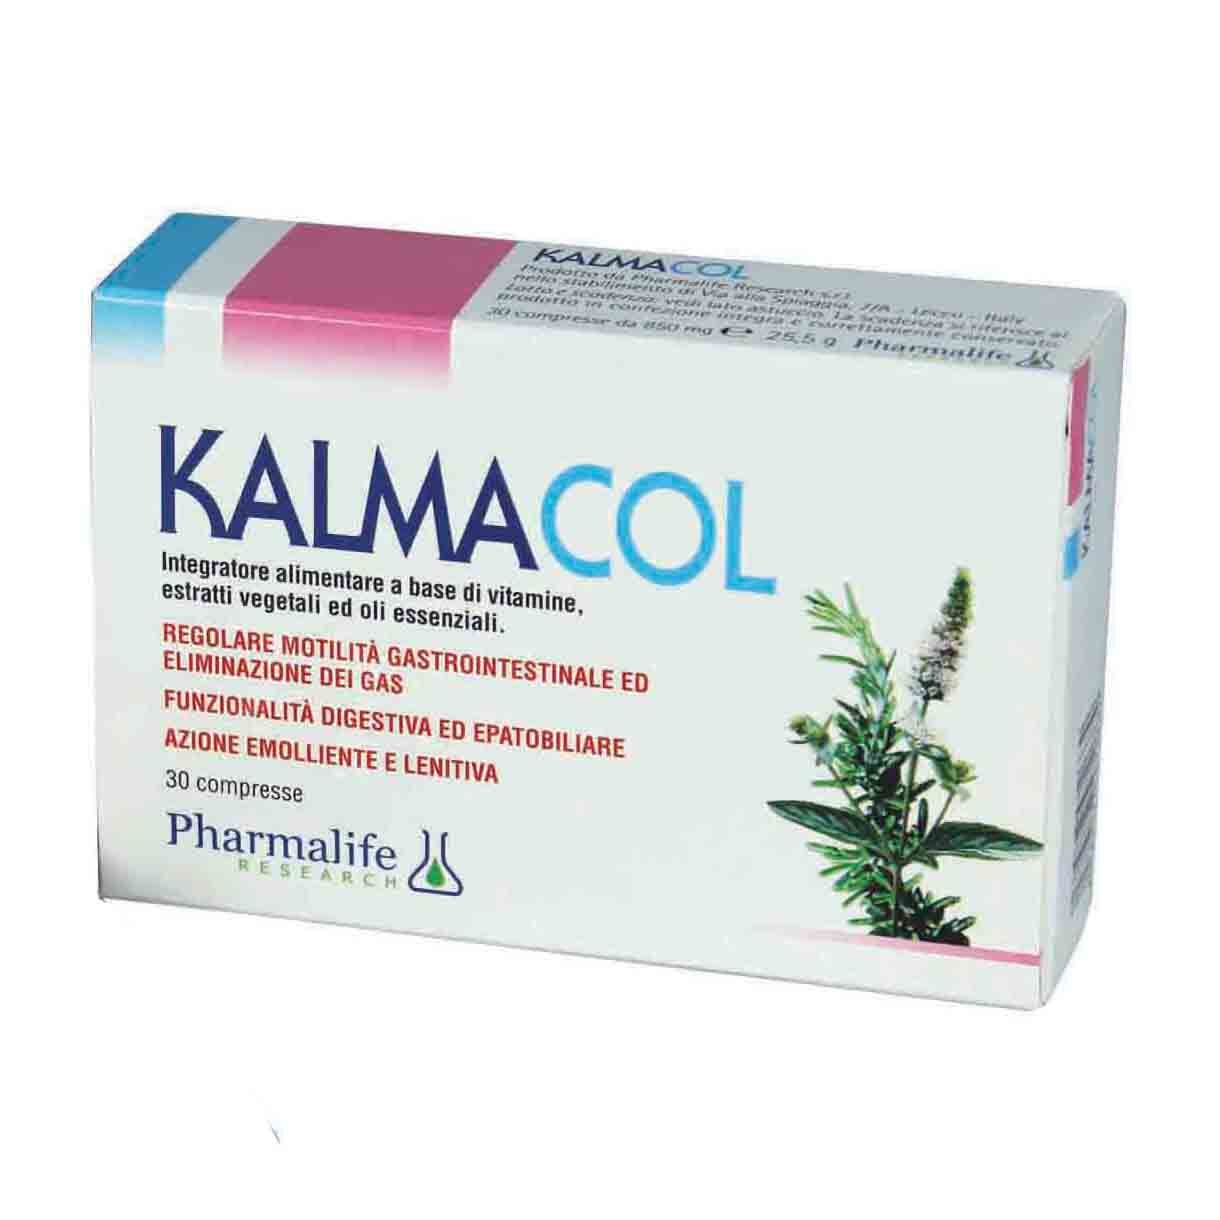 Pharmalife Research Srl Kalmacol 30 Compresse 24g